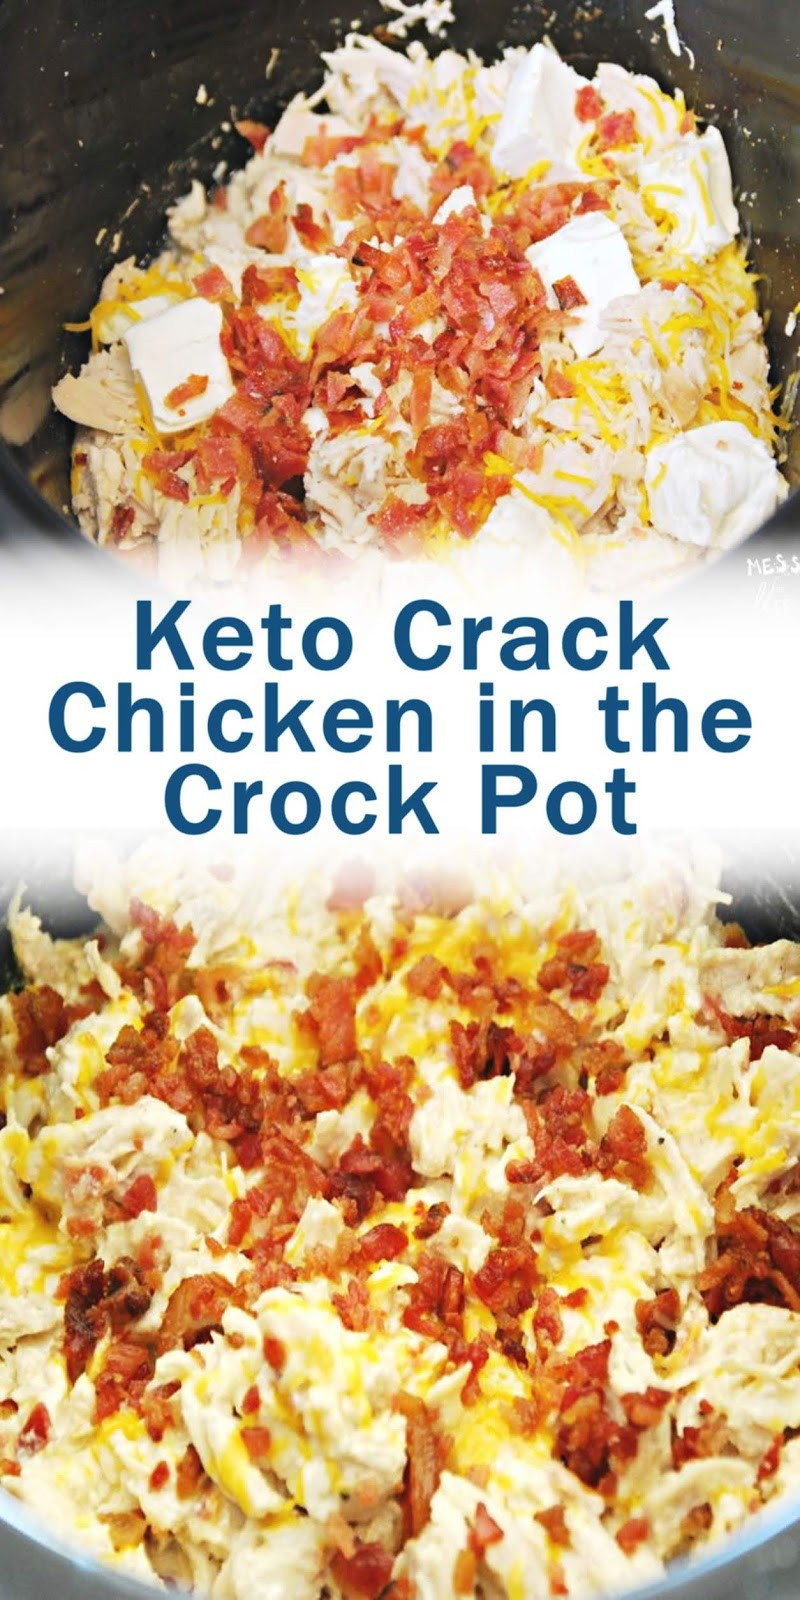 Crock Pot Keto Crack Chicken
 Keto Crack Chicken in the Crock Pot